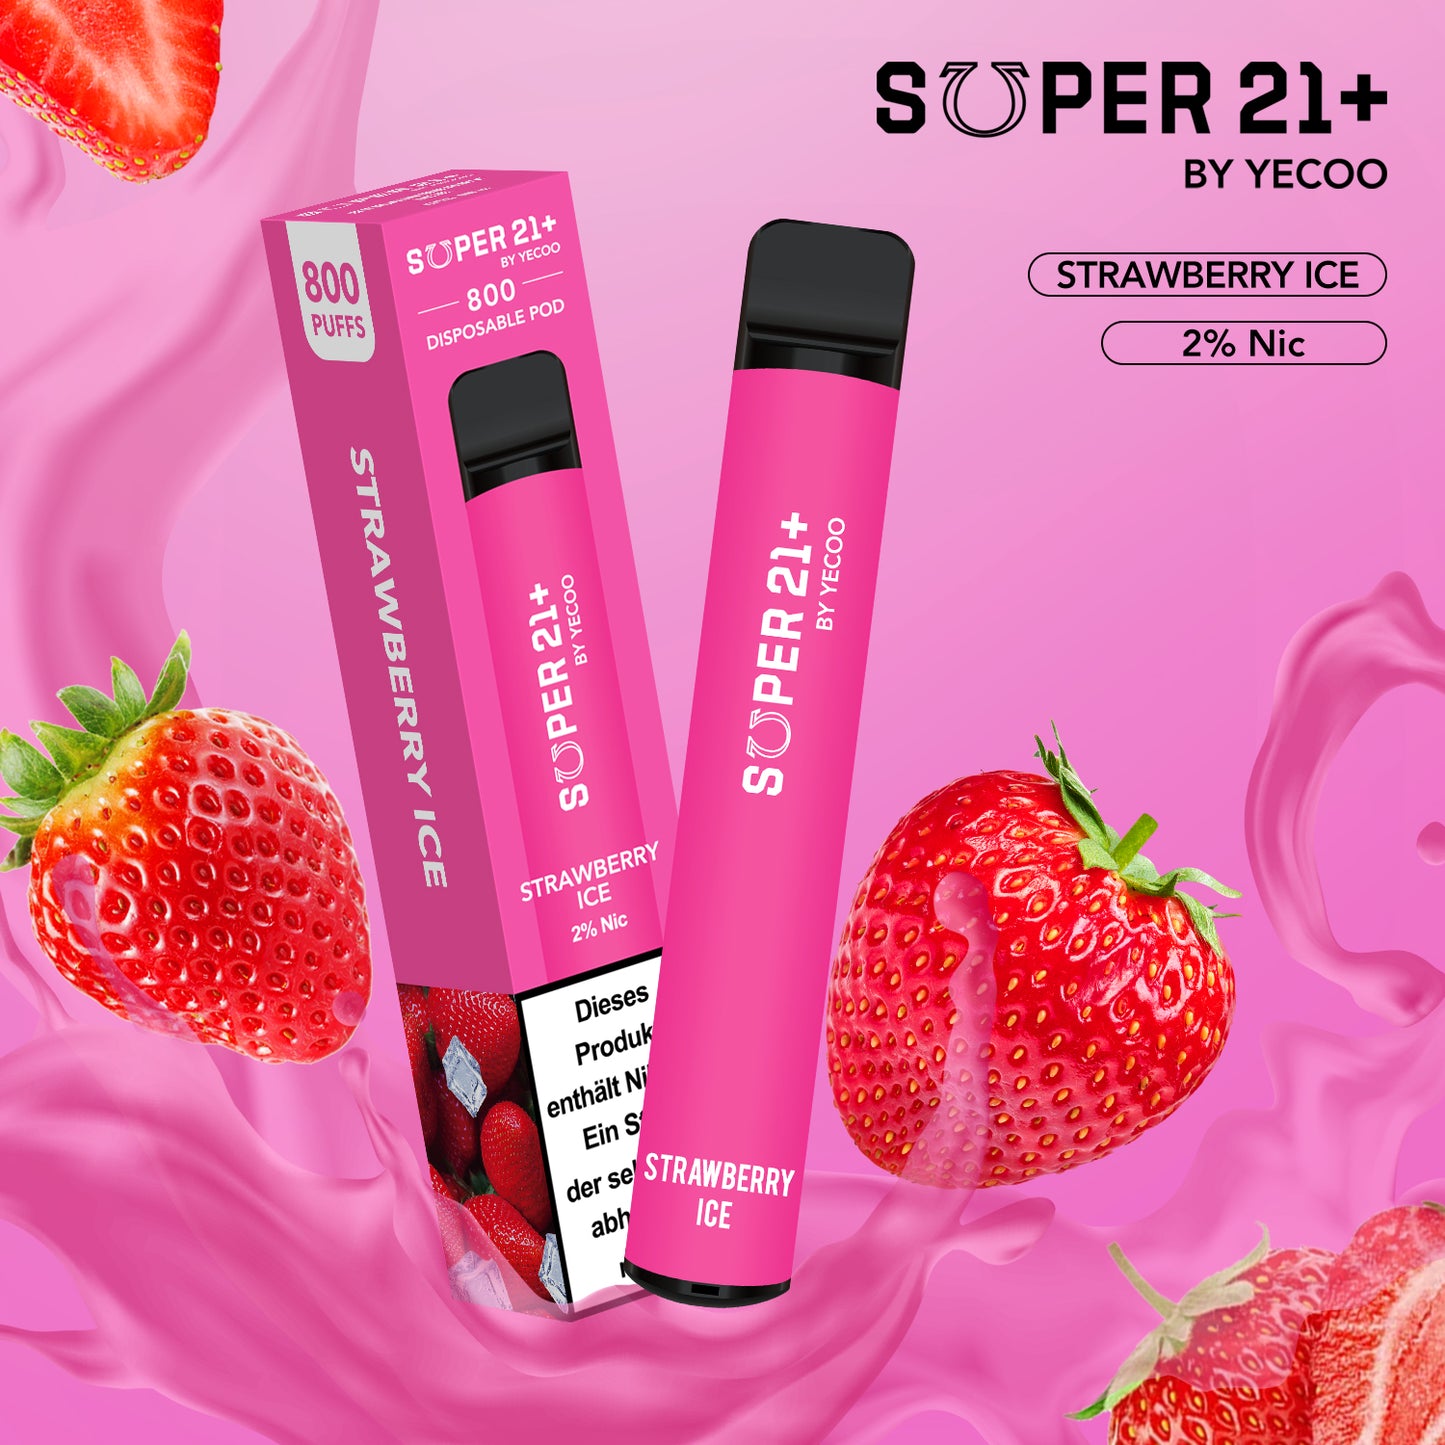 Strawberry Ice (2%) 800 – Super21+